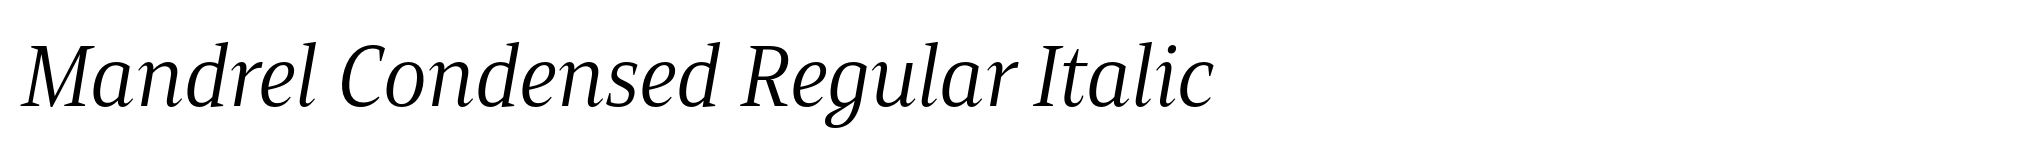 Mandrel Condensed Regular Italic image